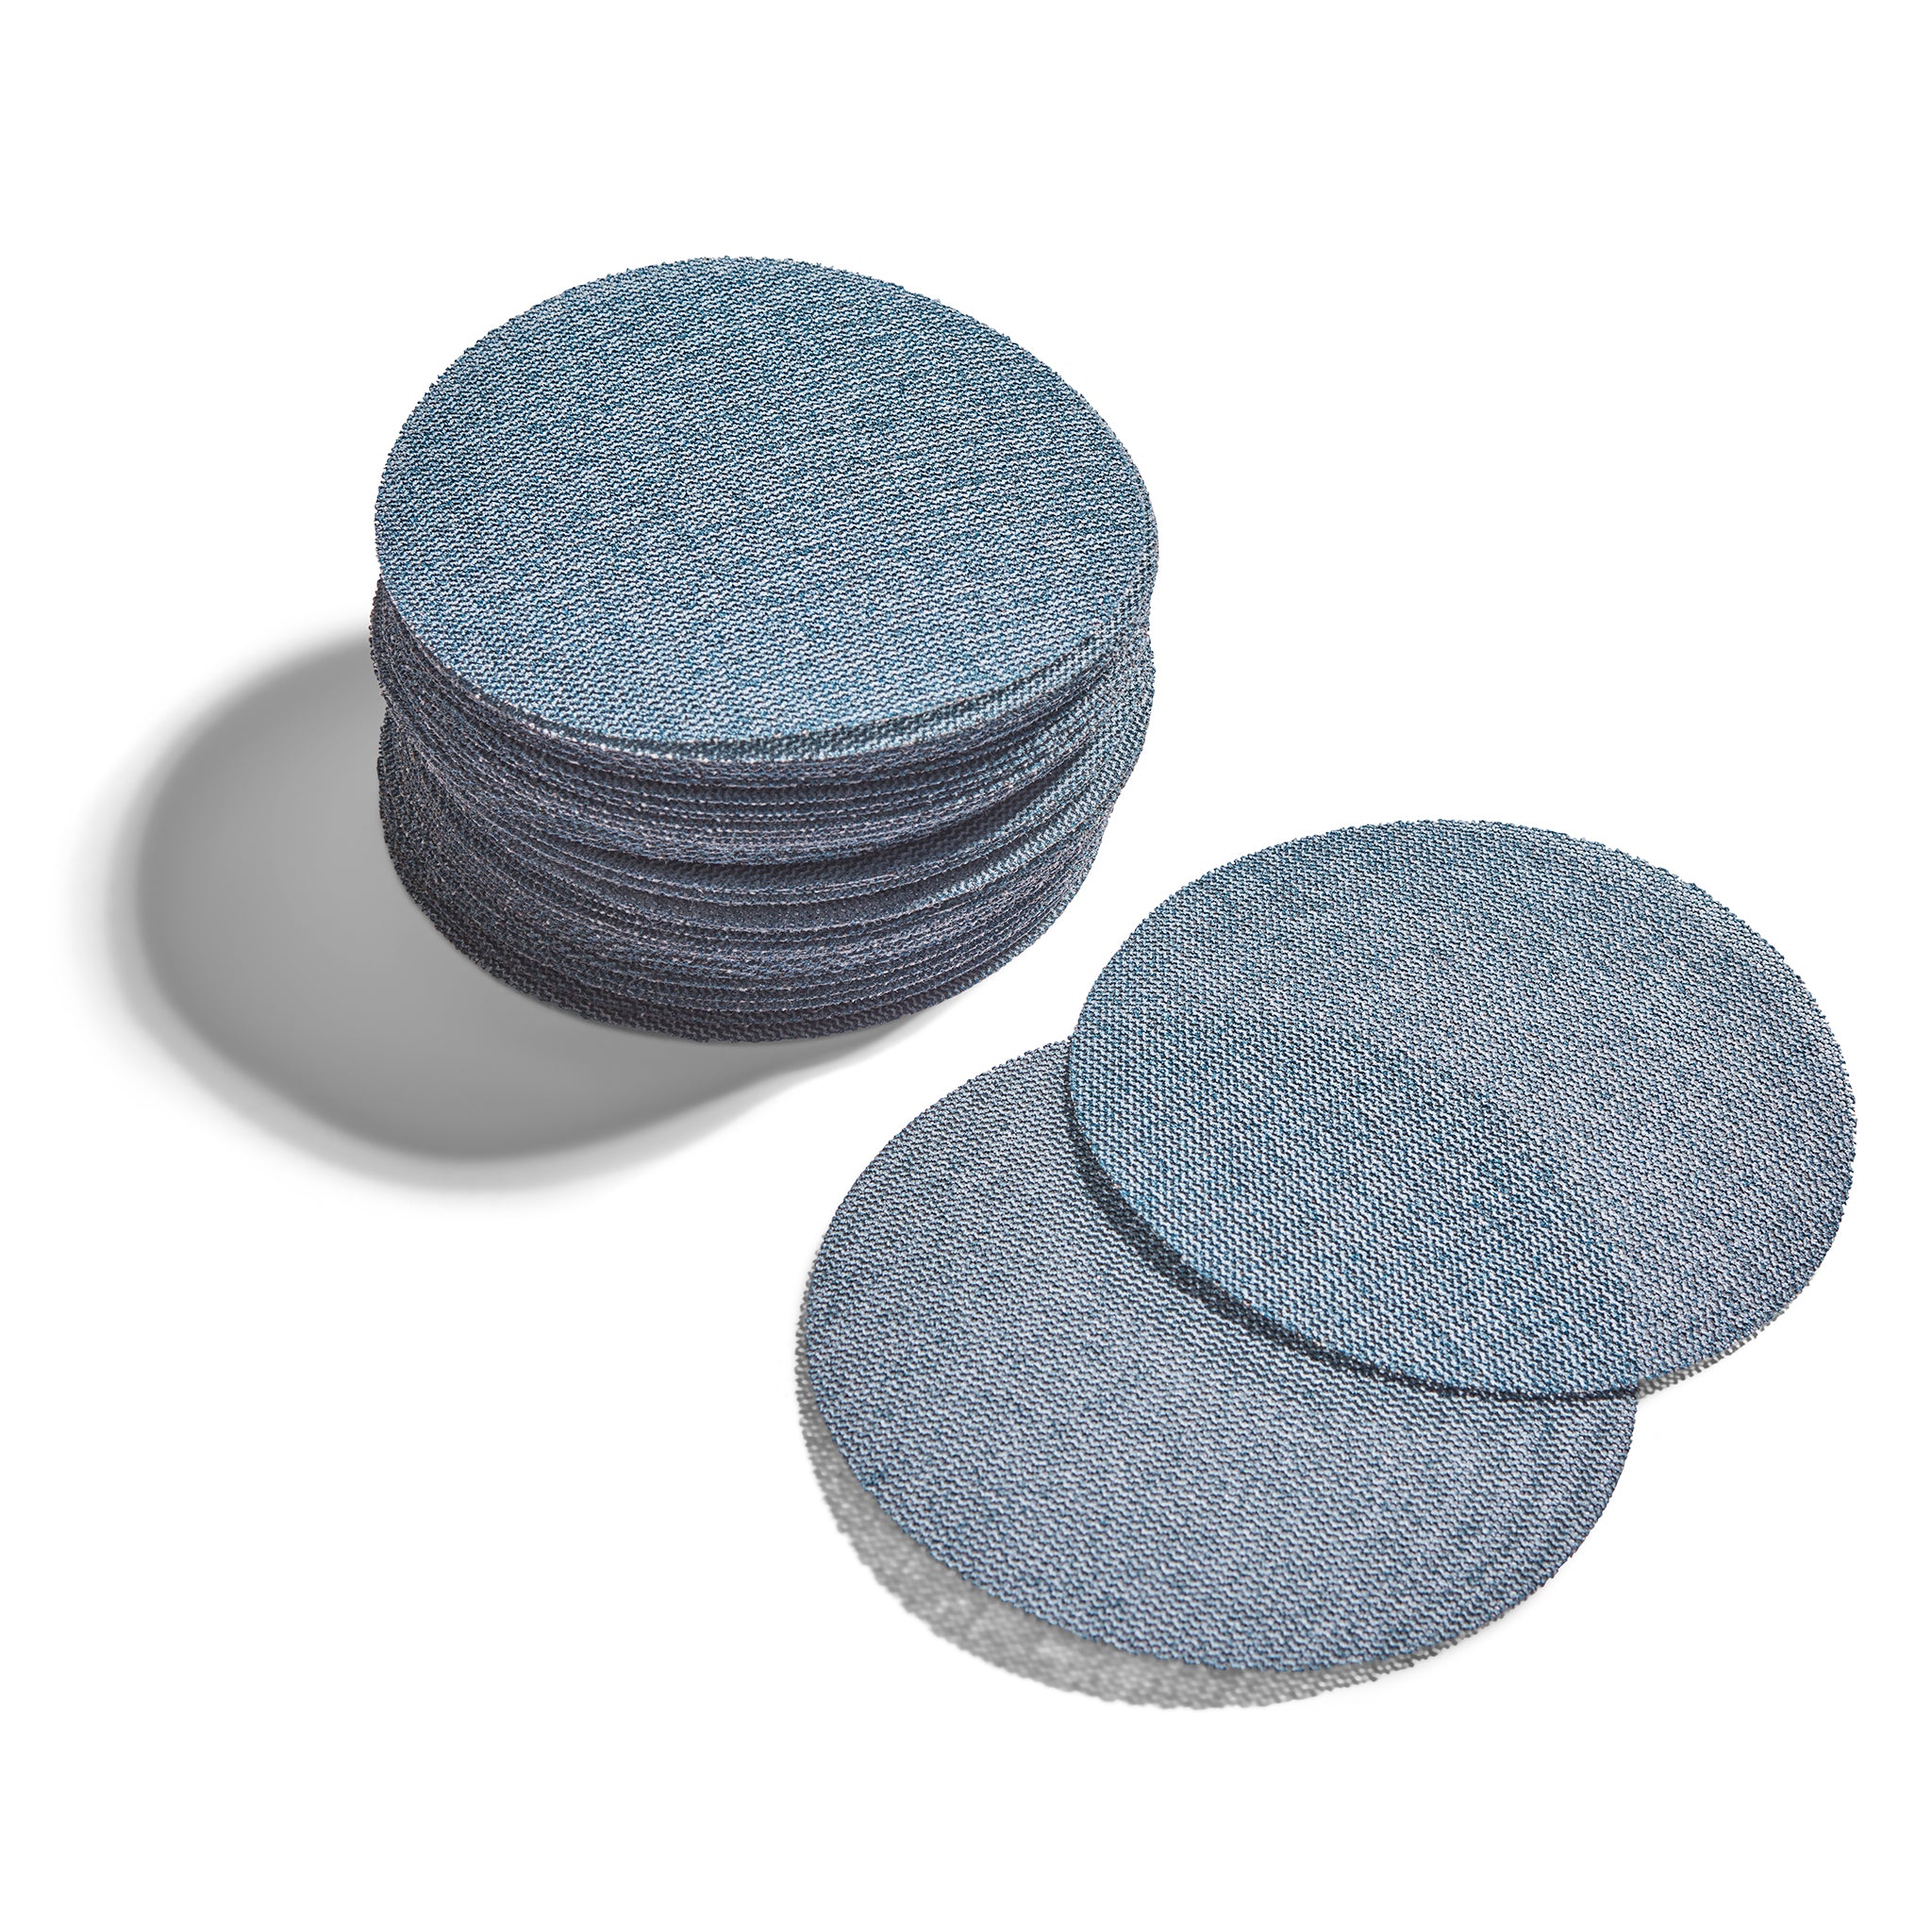 125mm Net Abrasive Discs